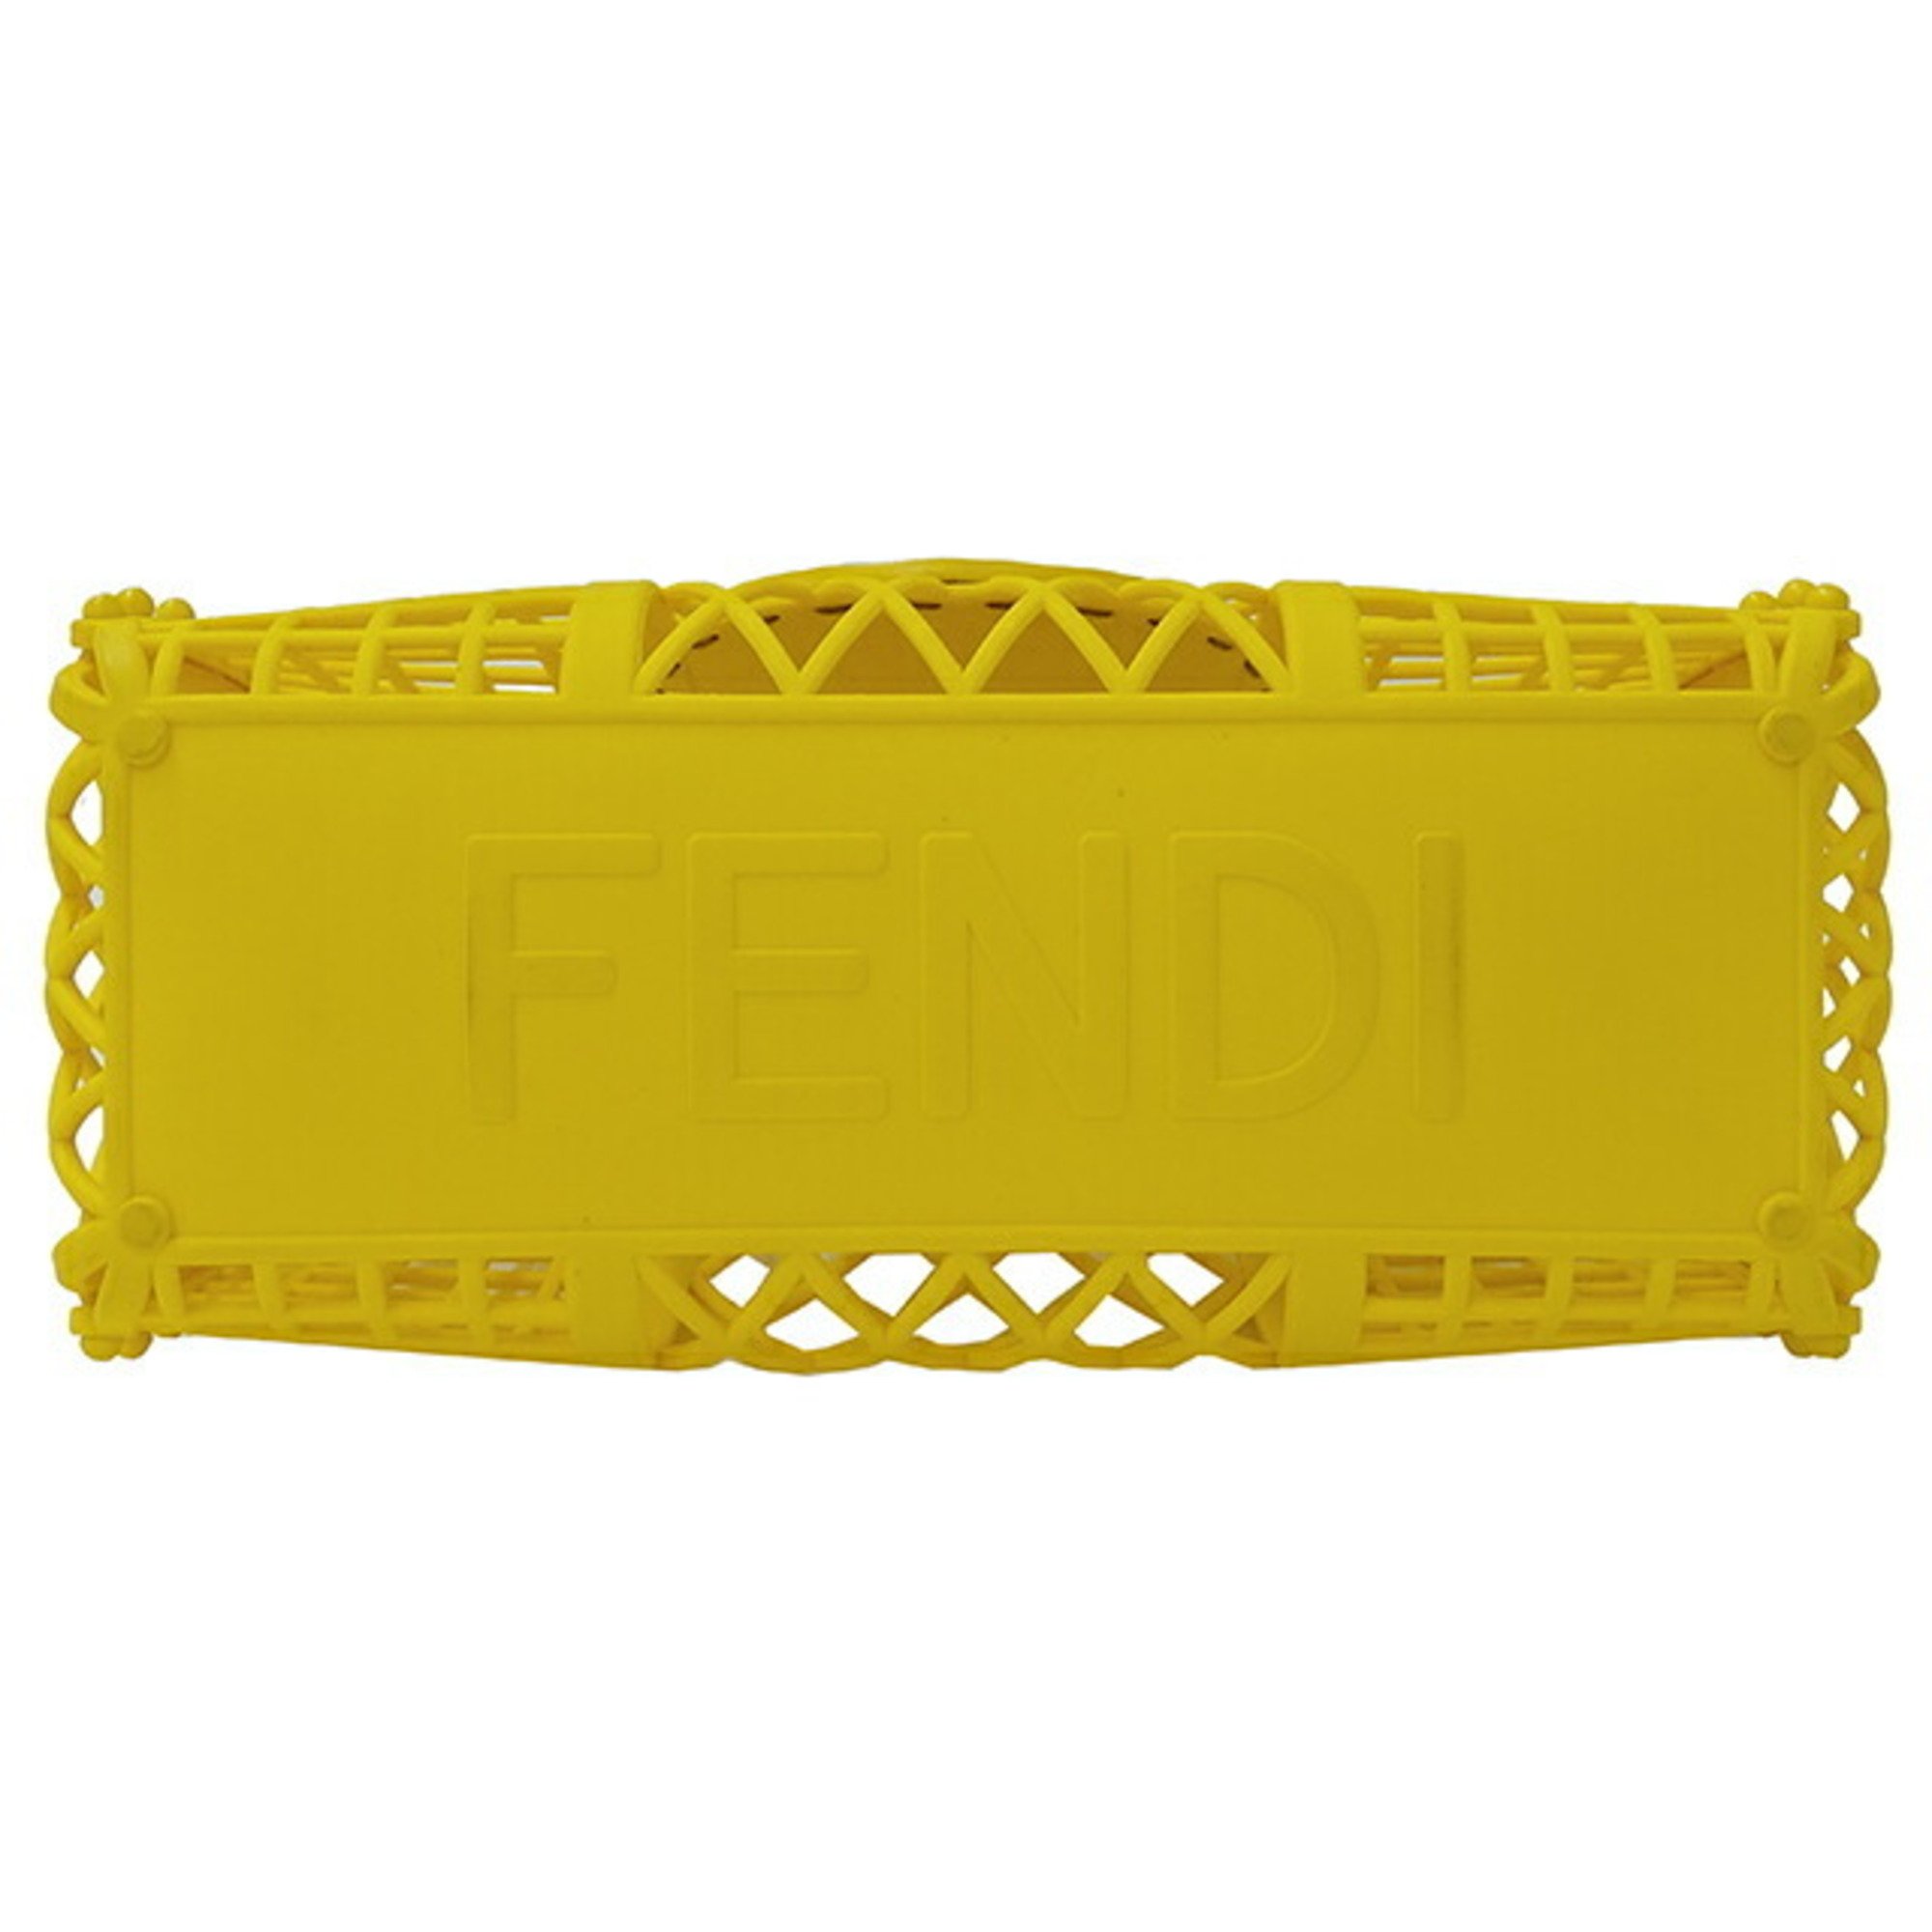 FENDI Women's Bag, Small Basket Handbag, Yellow, 8BH388, Beach Sea